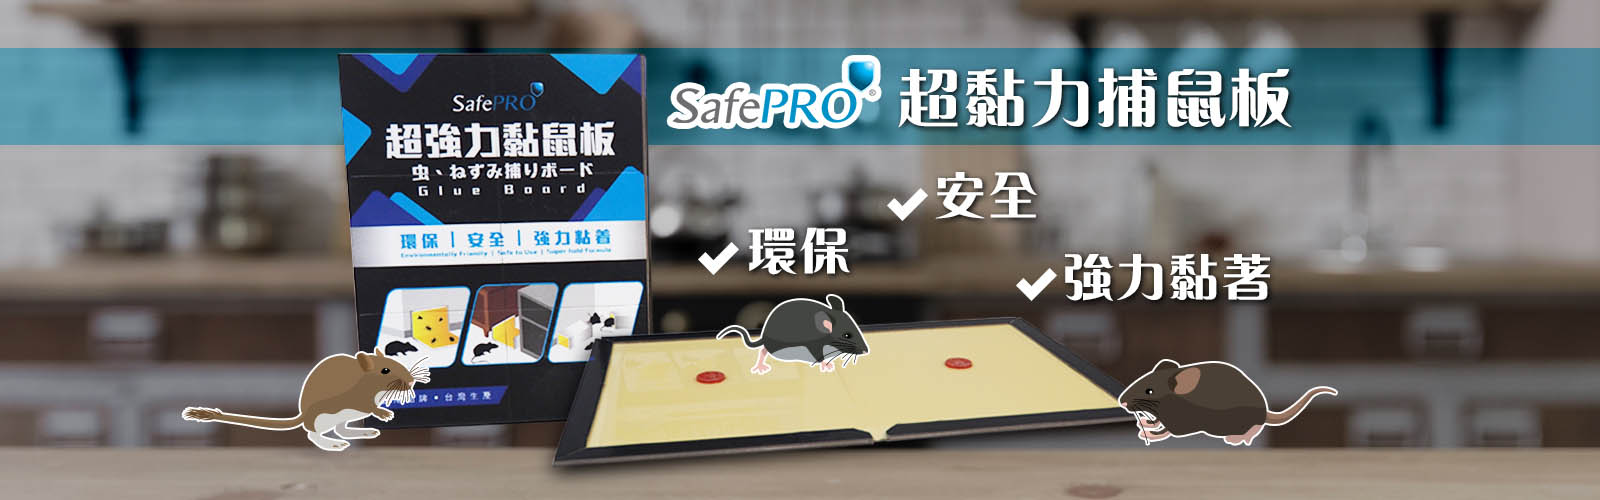 SafePRO® 超黏力捕鼠板 (硬紙卡)